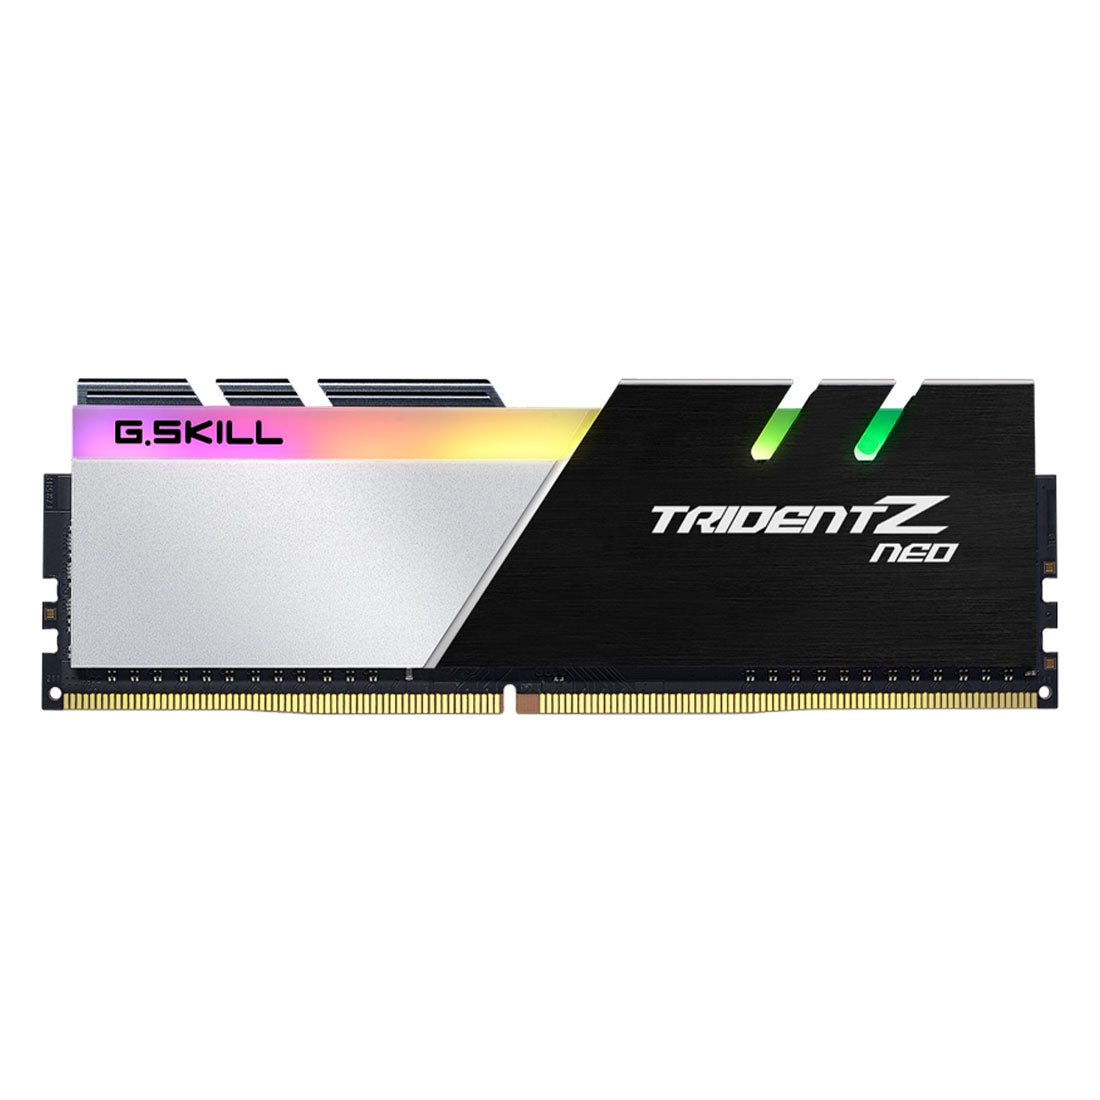 G.SKILL Trident Z Neo RAM 64GB(2x32GB) Dual Channel Kit DDR4 3600MHz Desktop Memory